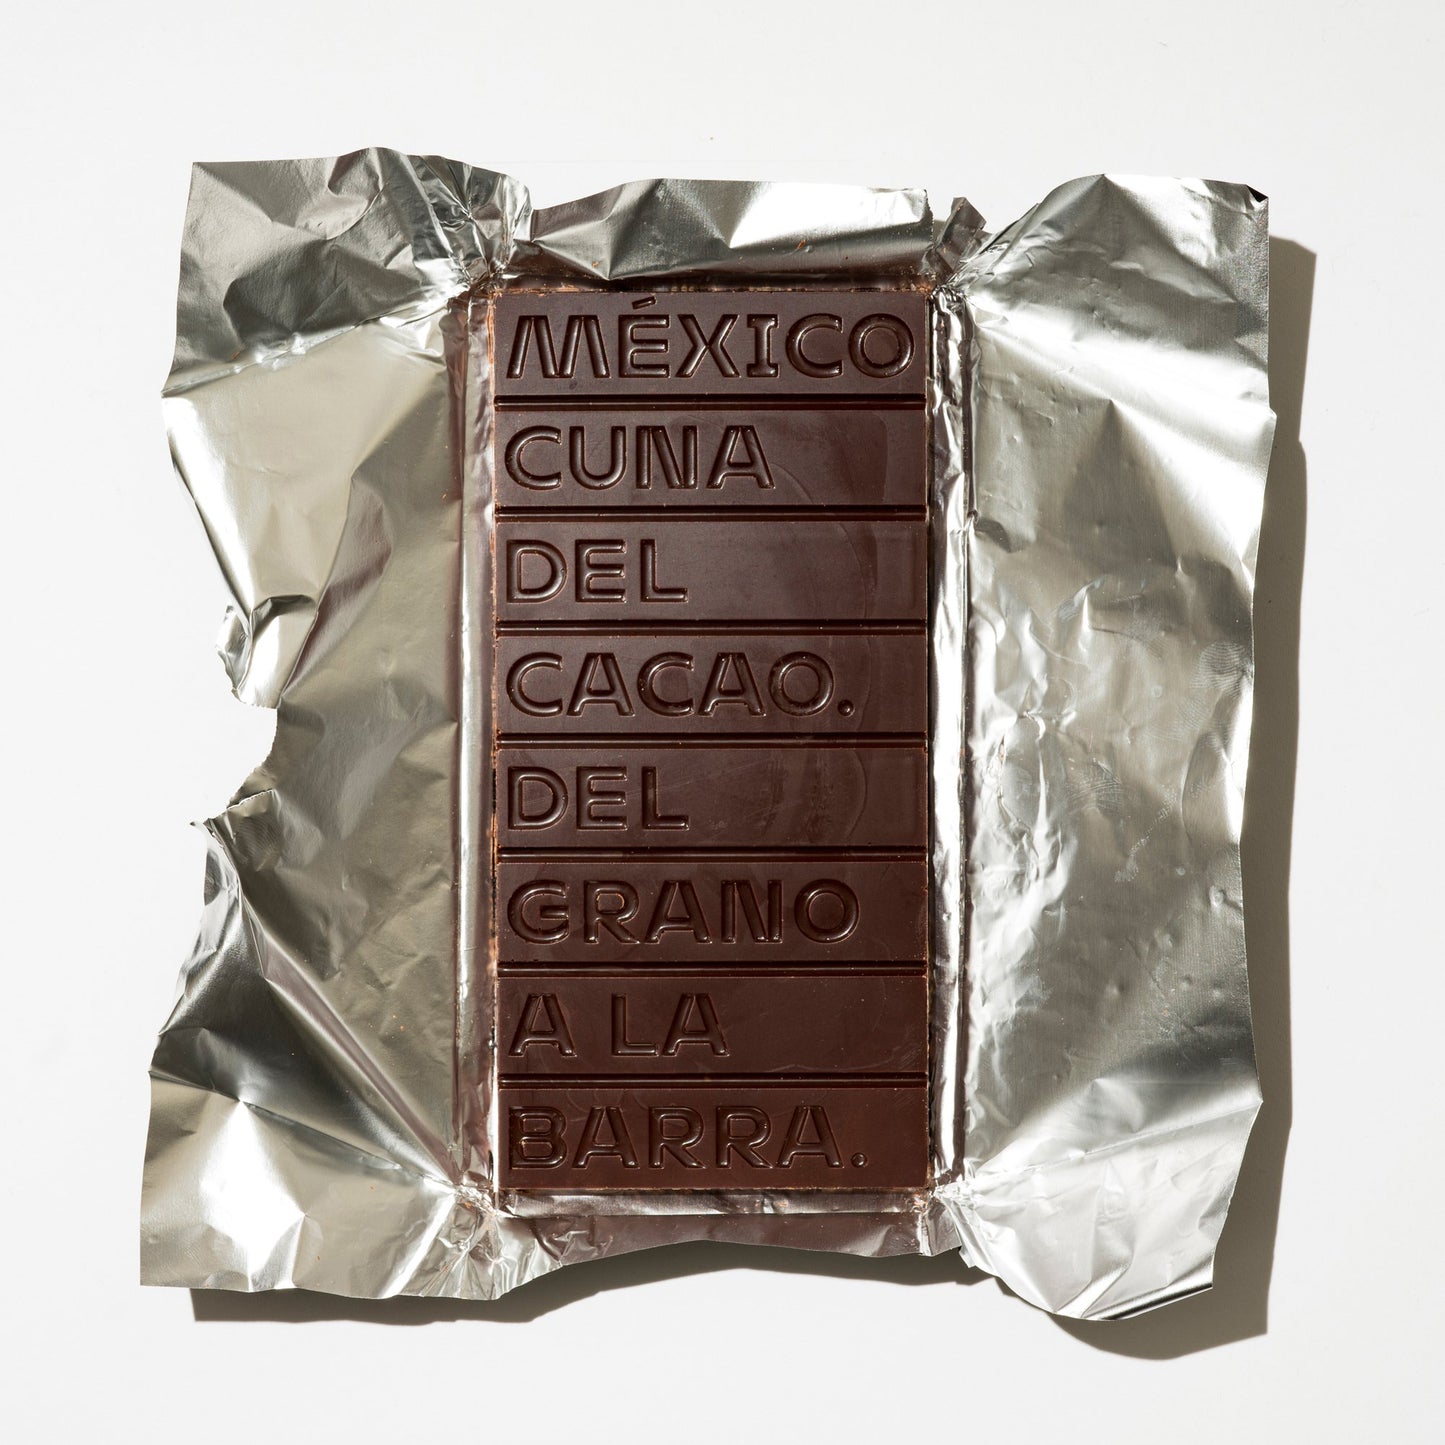 Cuna de Piedra 73% Chocolate Negro Mexicano con Mezcal Joven | Cacao tradicional mexicano